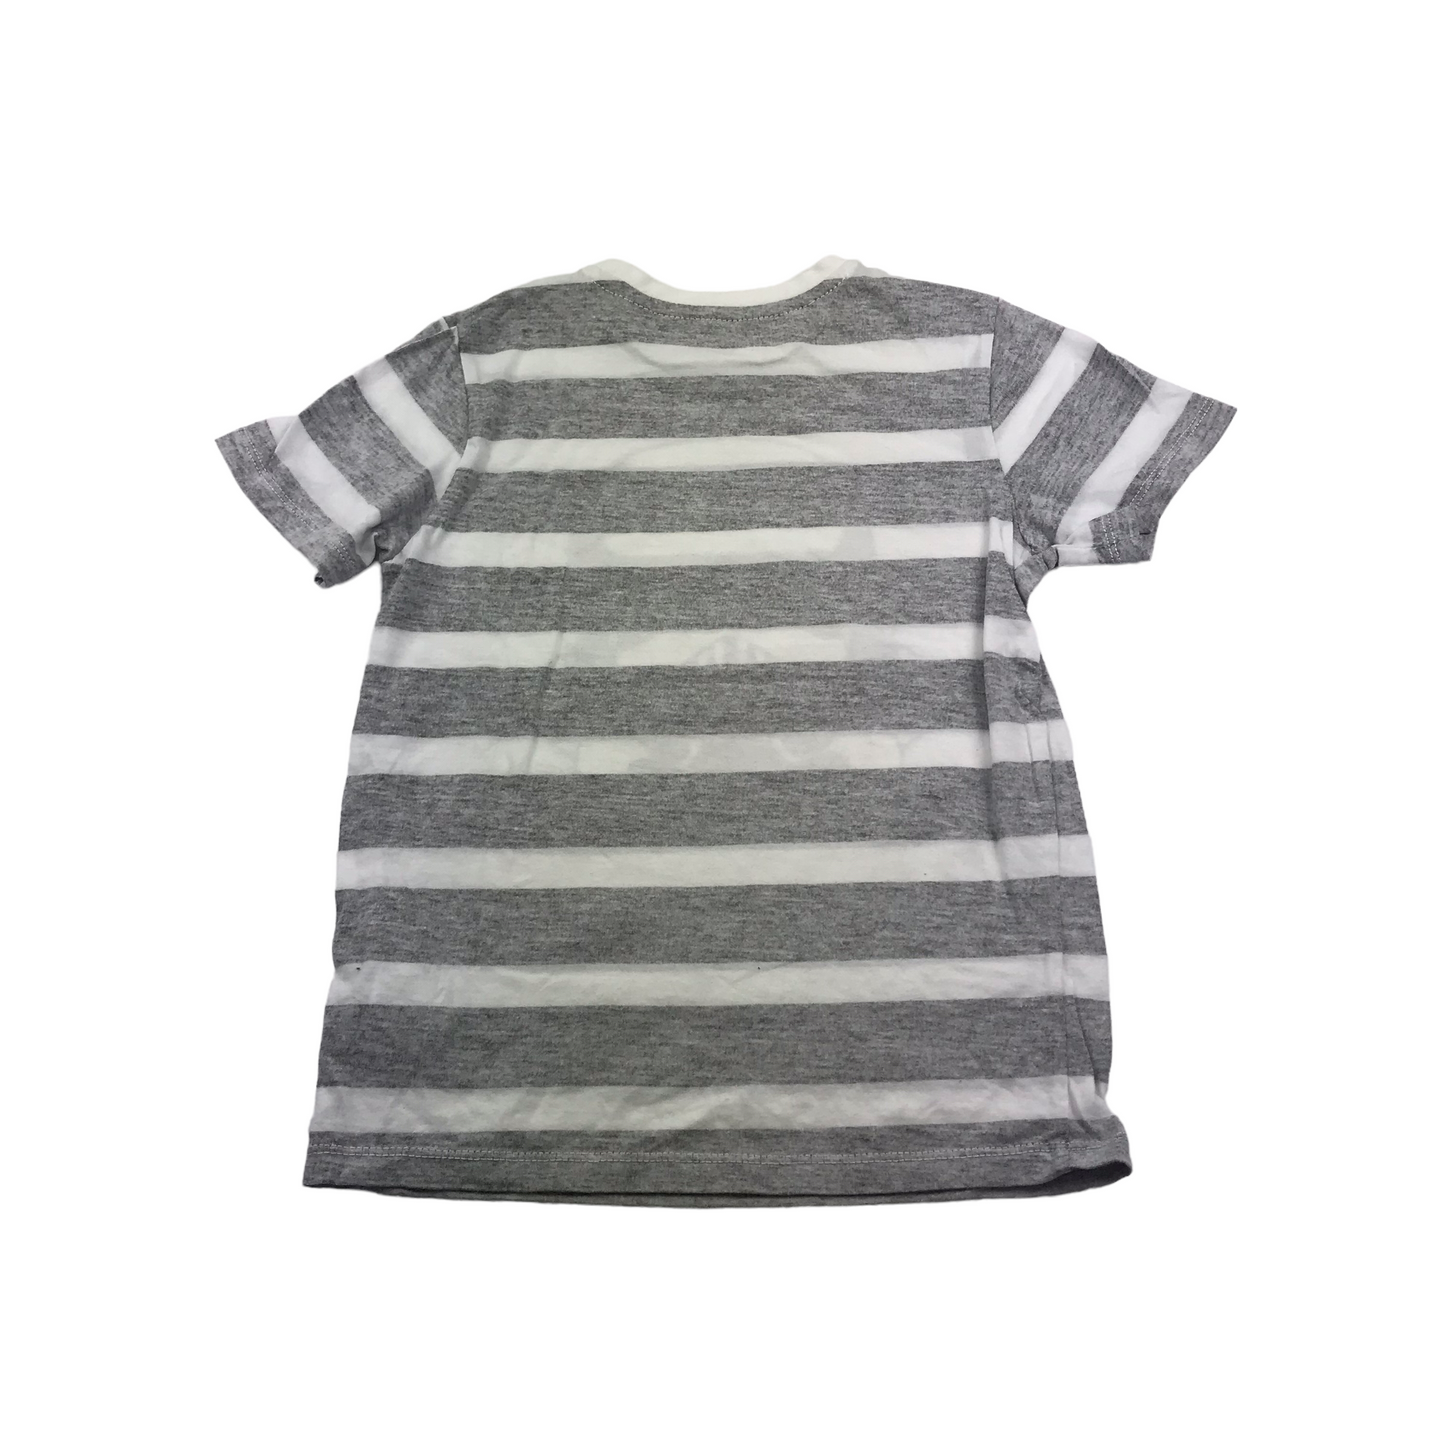 H&M Grey Stripy Star Wars Short Sleeve T-shirt Age 7